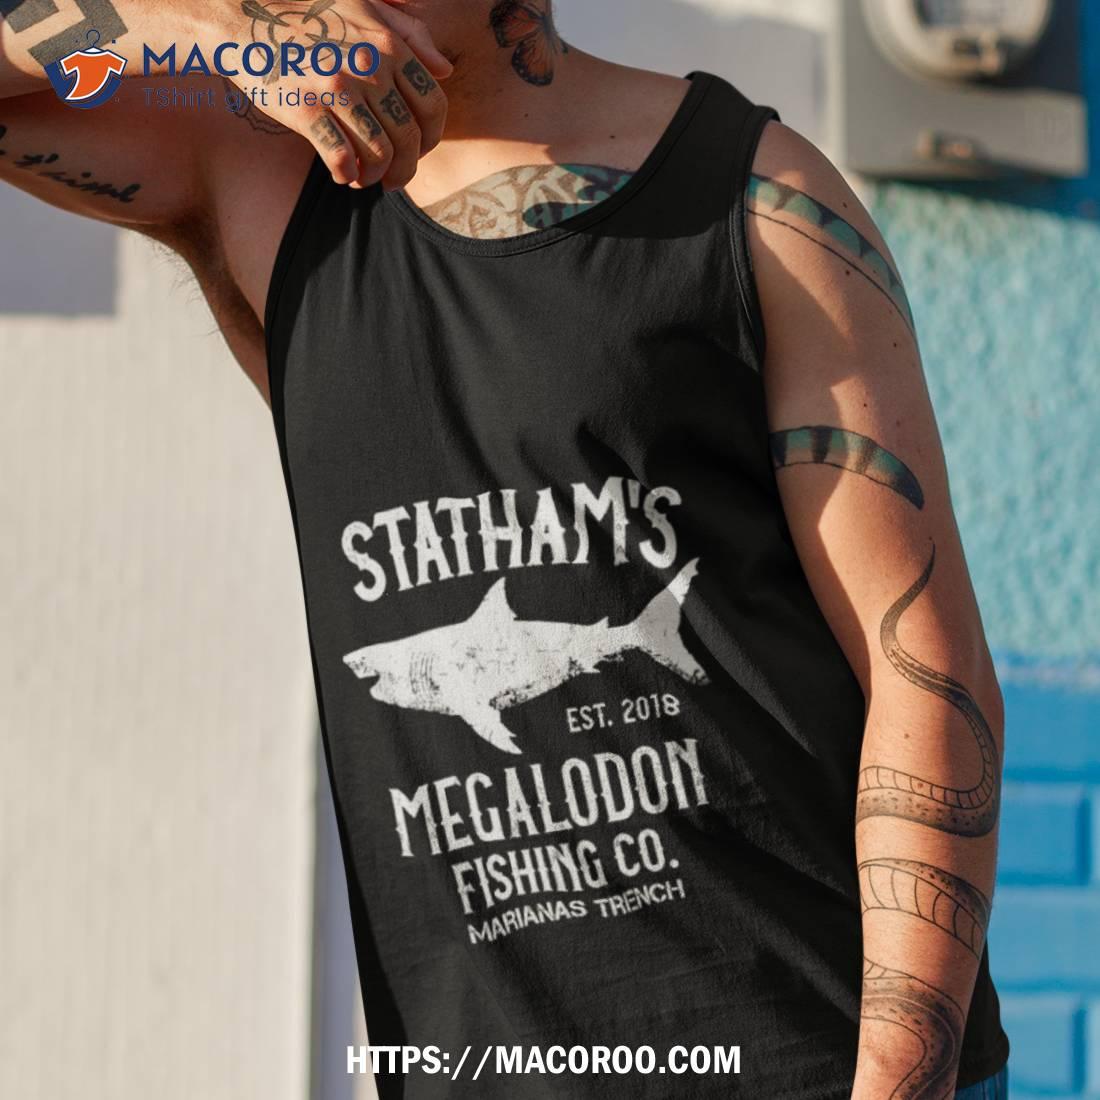 The Meg Jason Statham Megalodon Shark Fishing Shirt